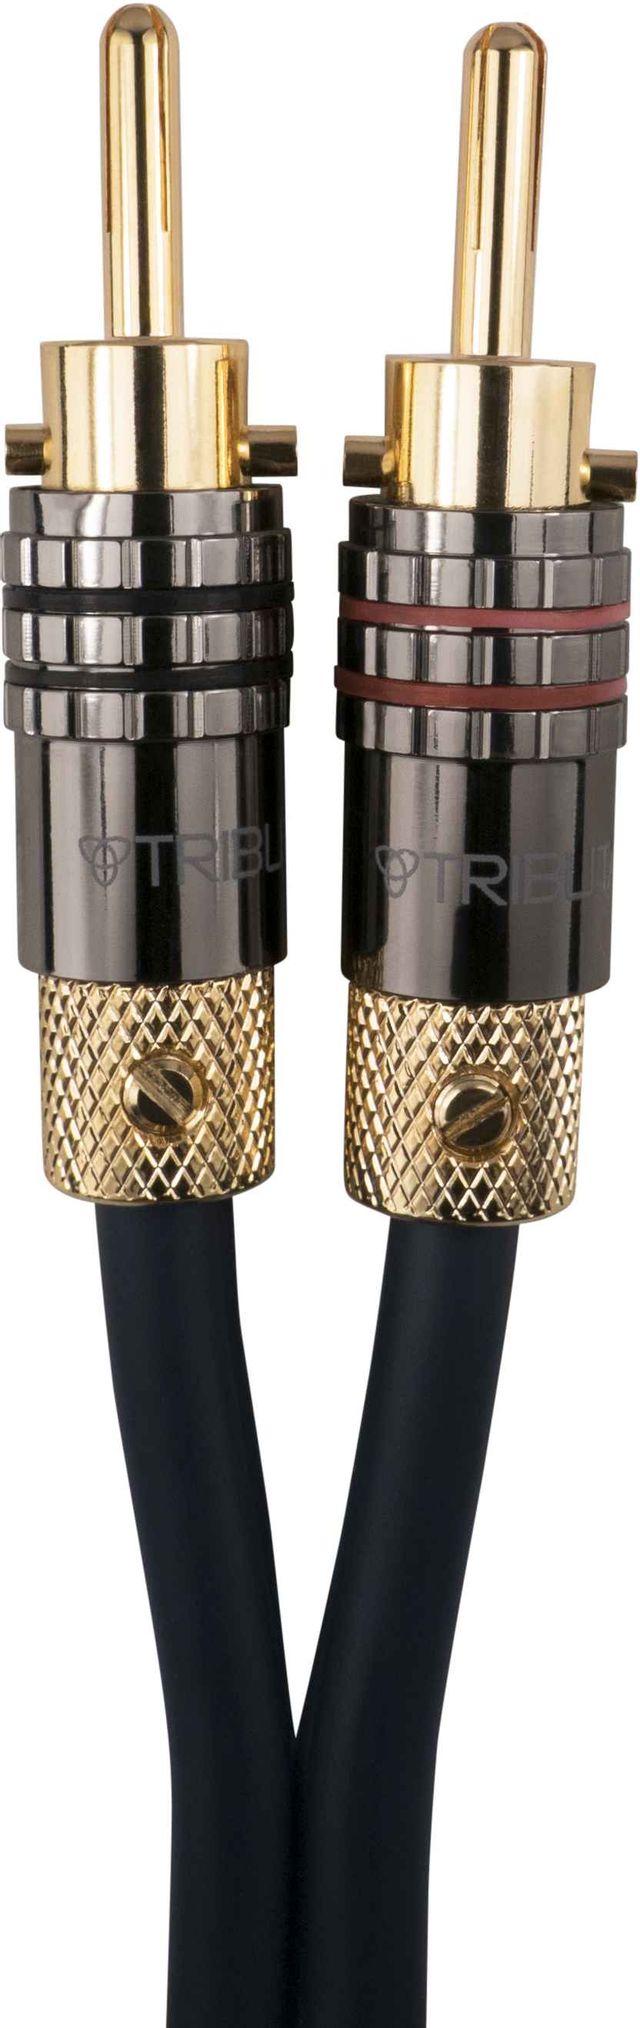 Tributaries® Series 8 8 Ft. Banana Plugs Speaker Cable